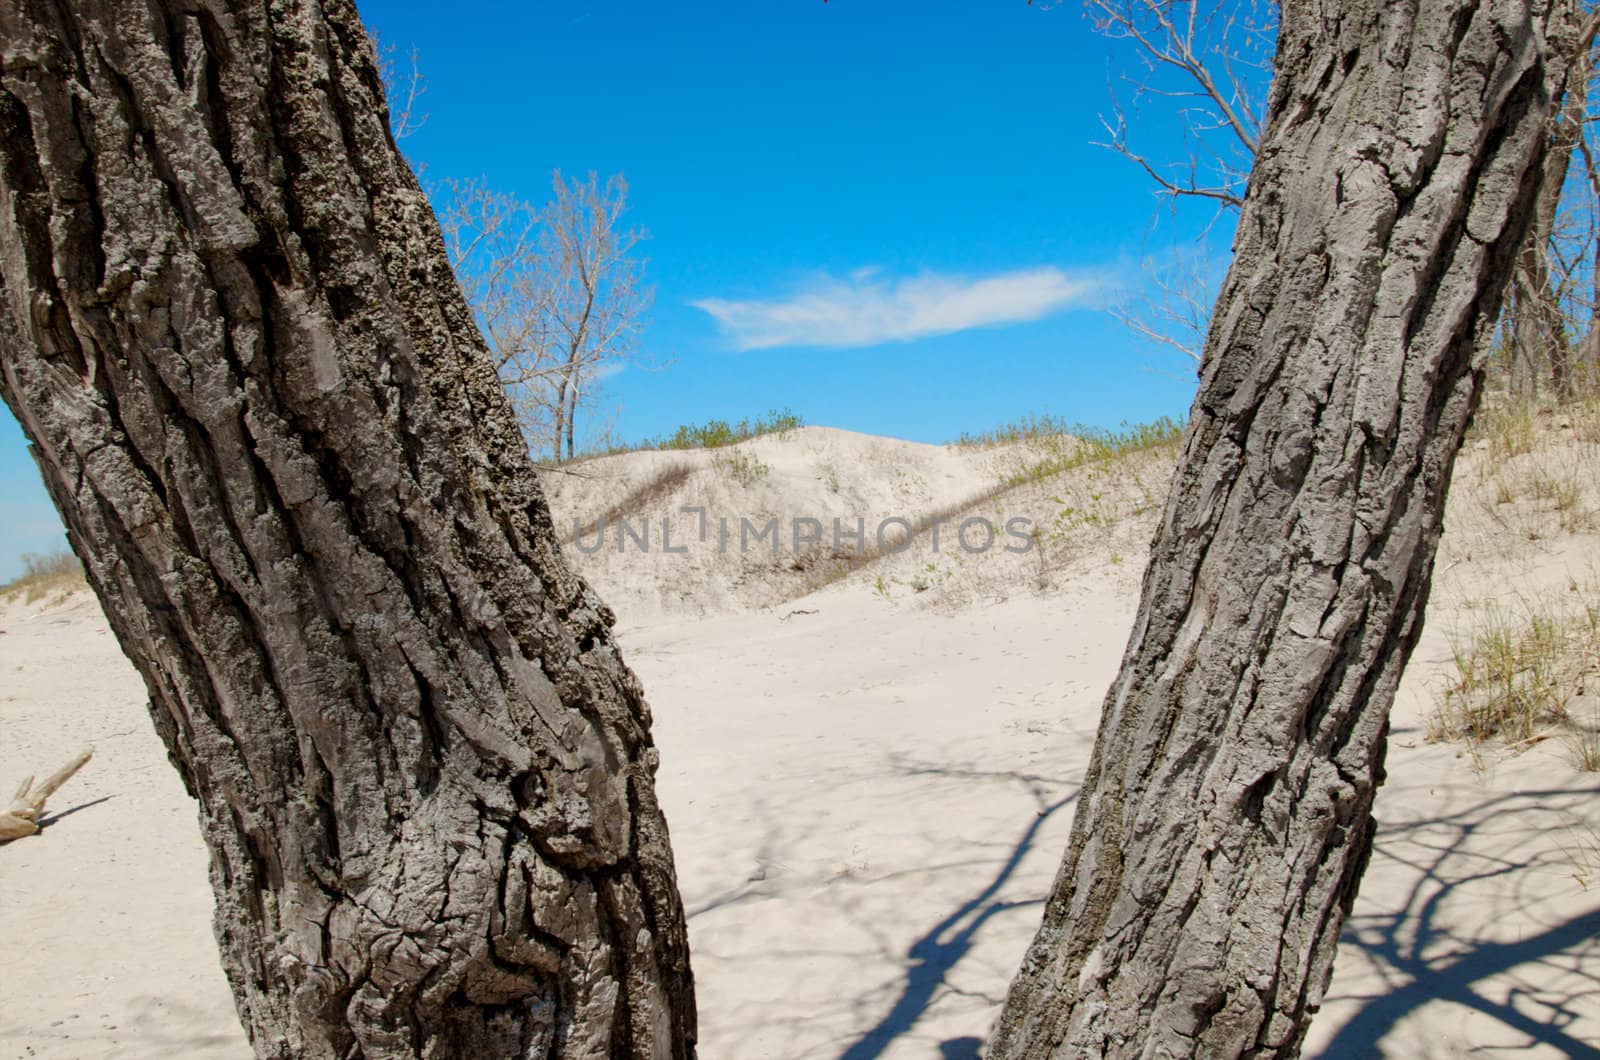 Dune Ecology, Sandbanks by tyroneburkemedia@gmail.com